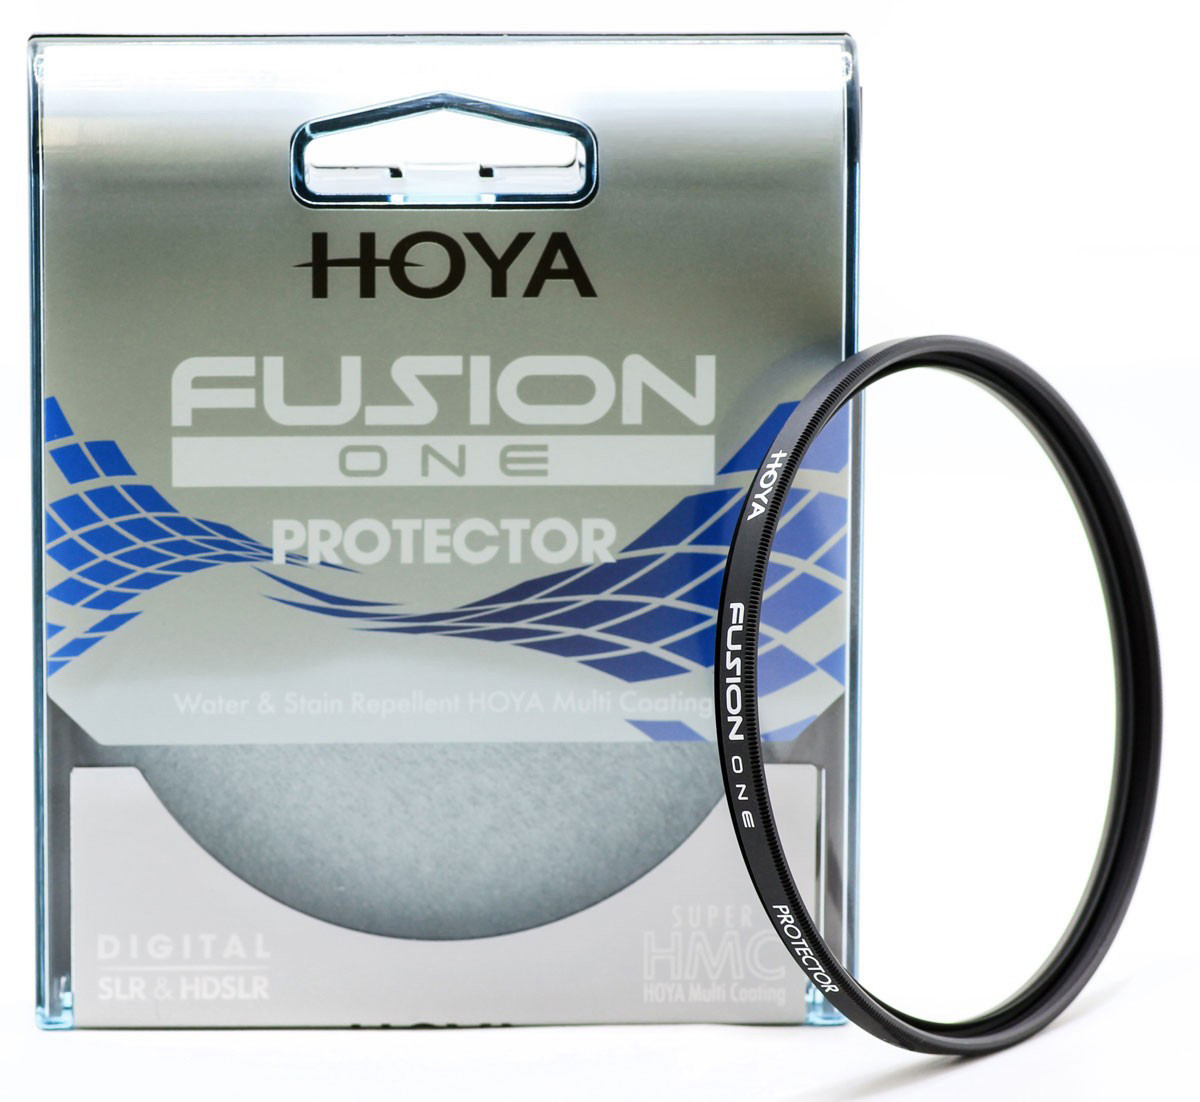 Hoya Fusion One 55mm